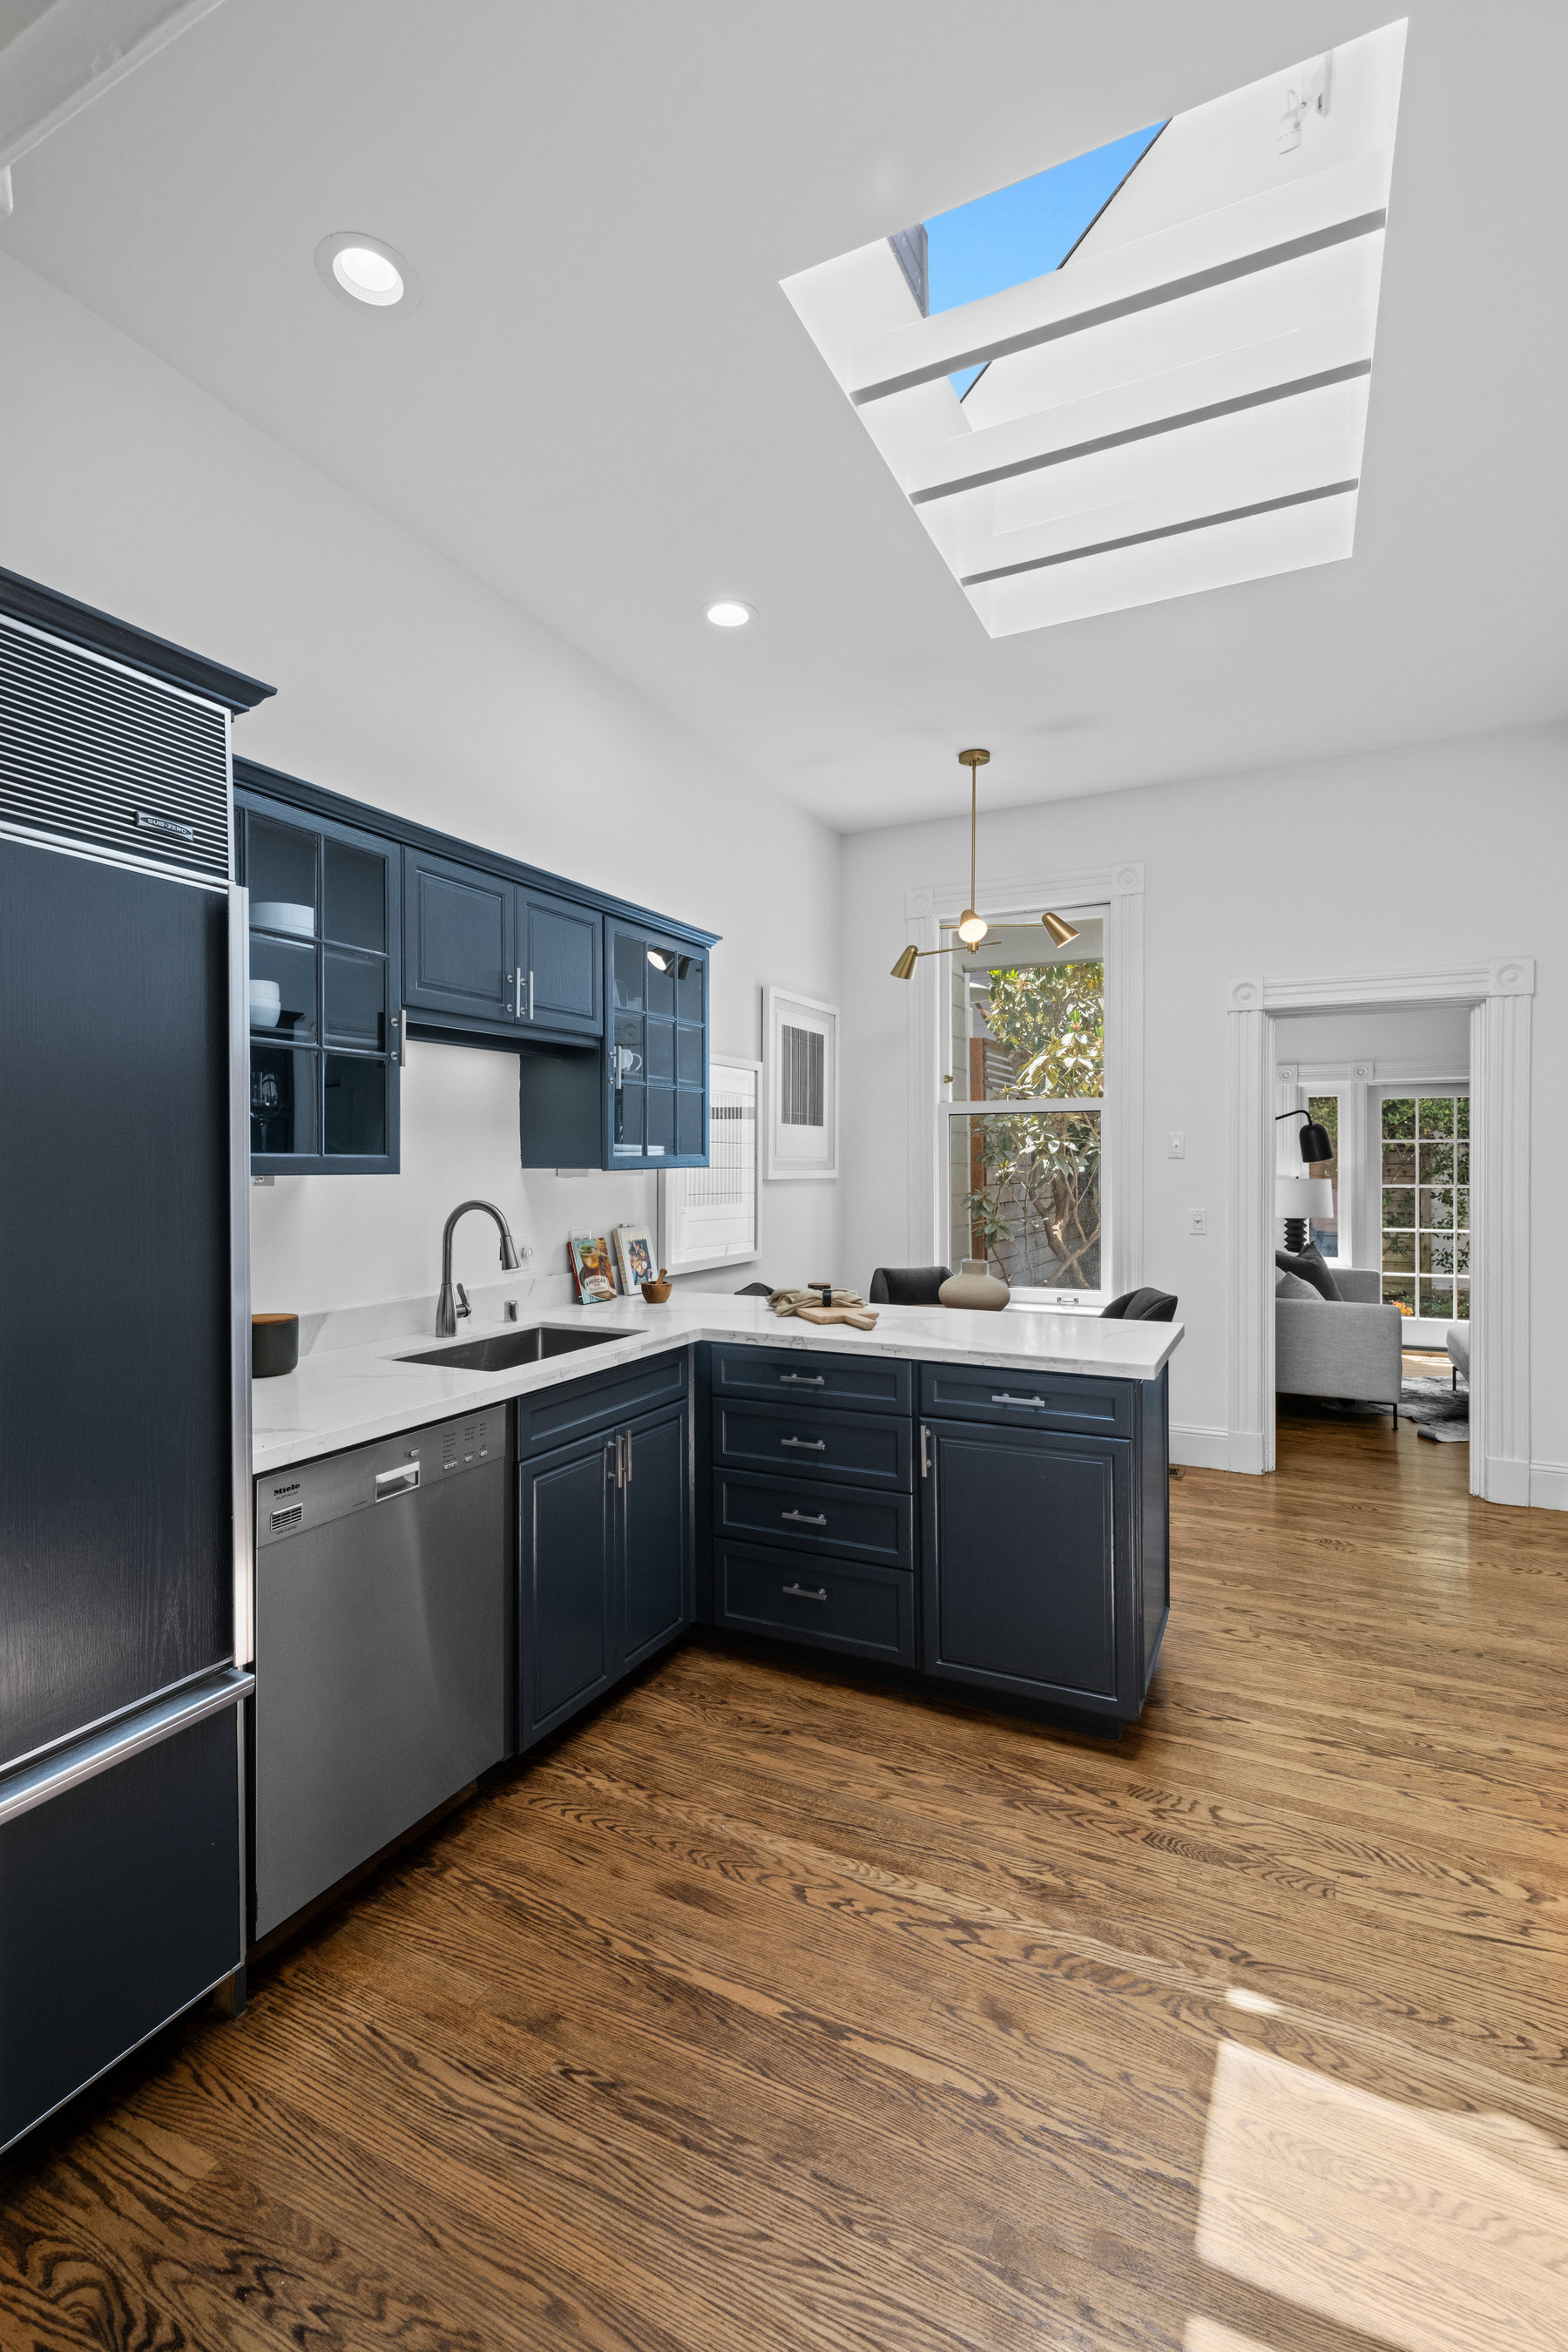 Property Photo: Kitchen has hardwood floors throughout. 